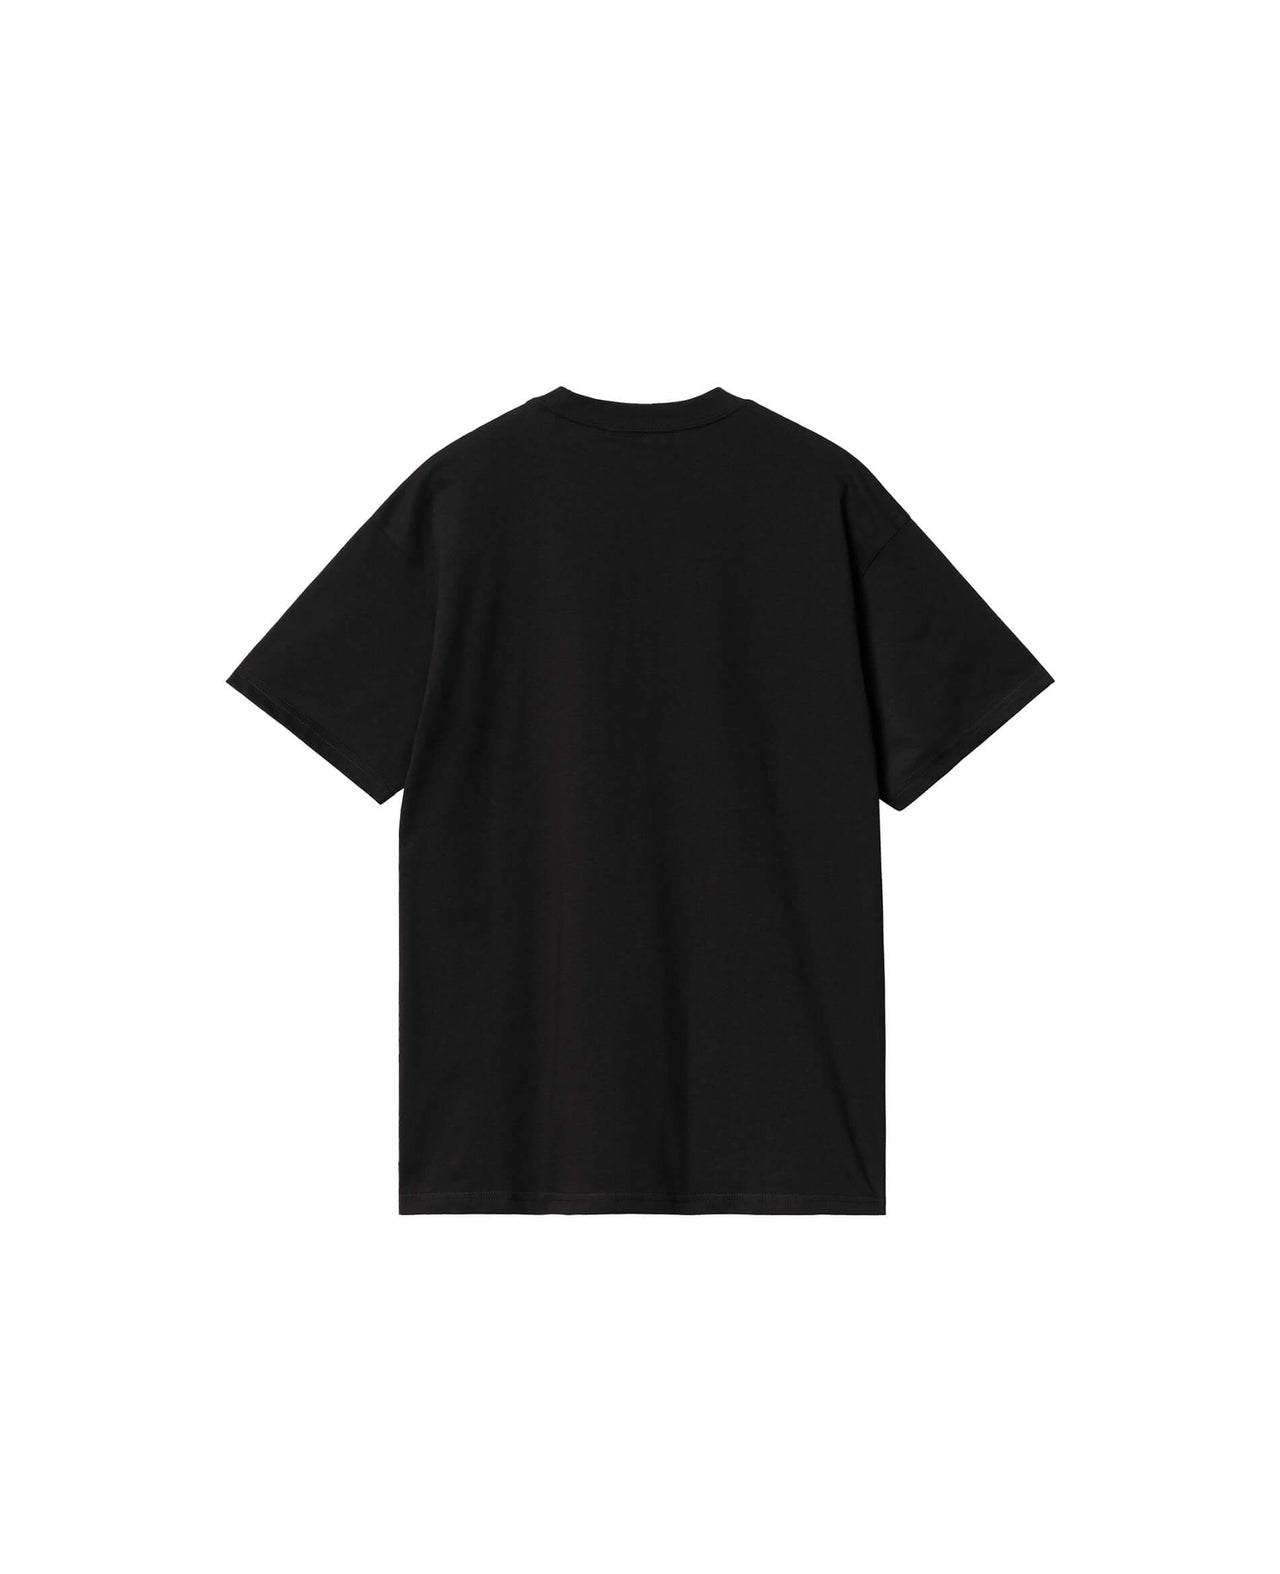 Carhartt WIP x TRESOR Globus S/S T-Shirt